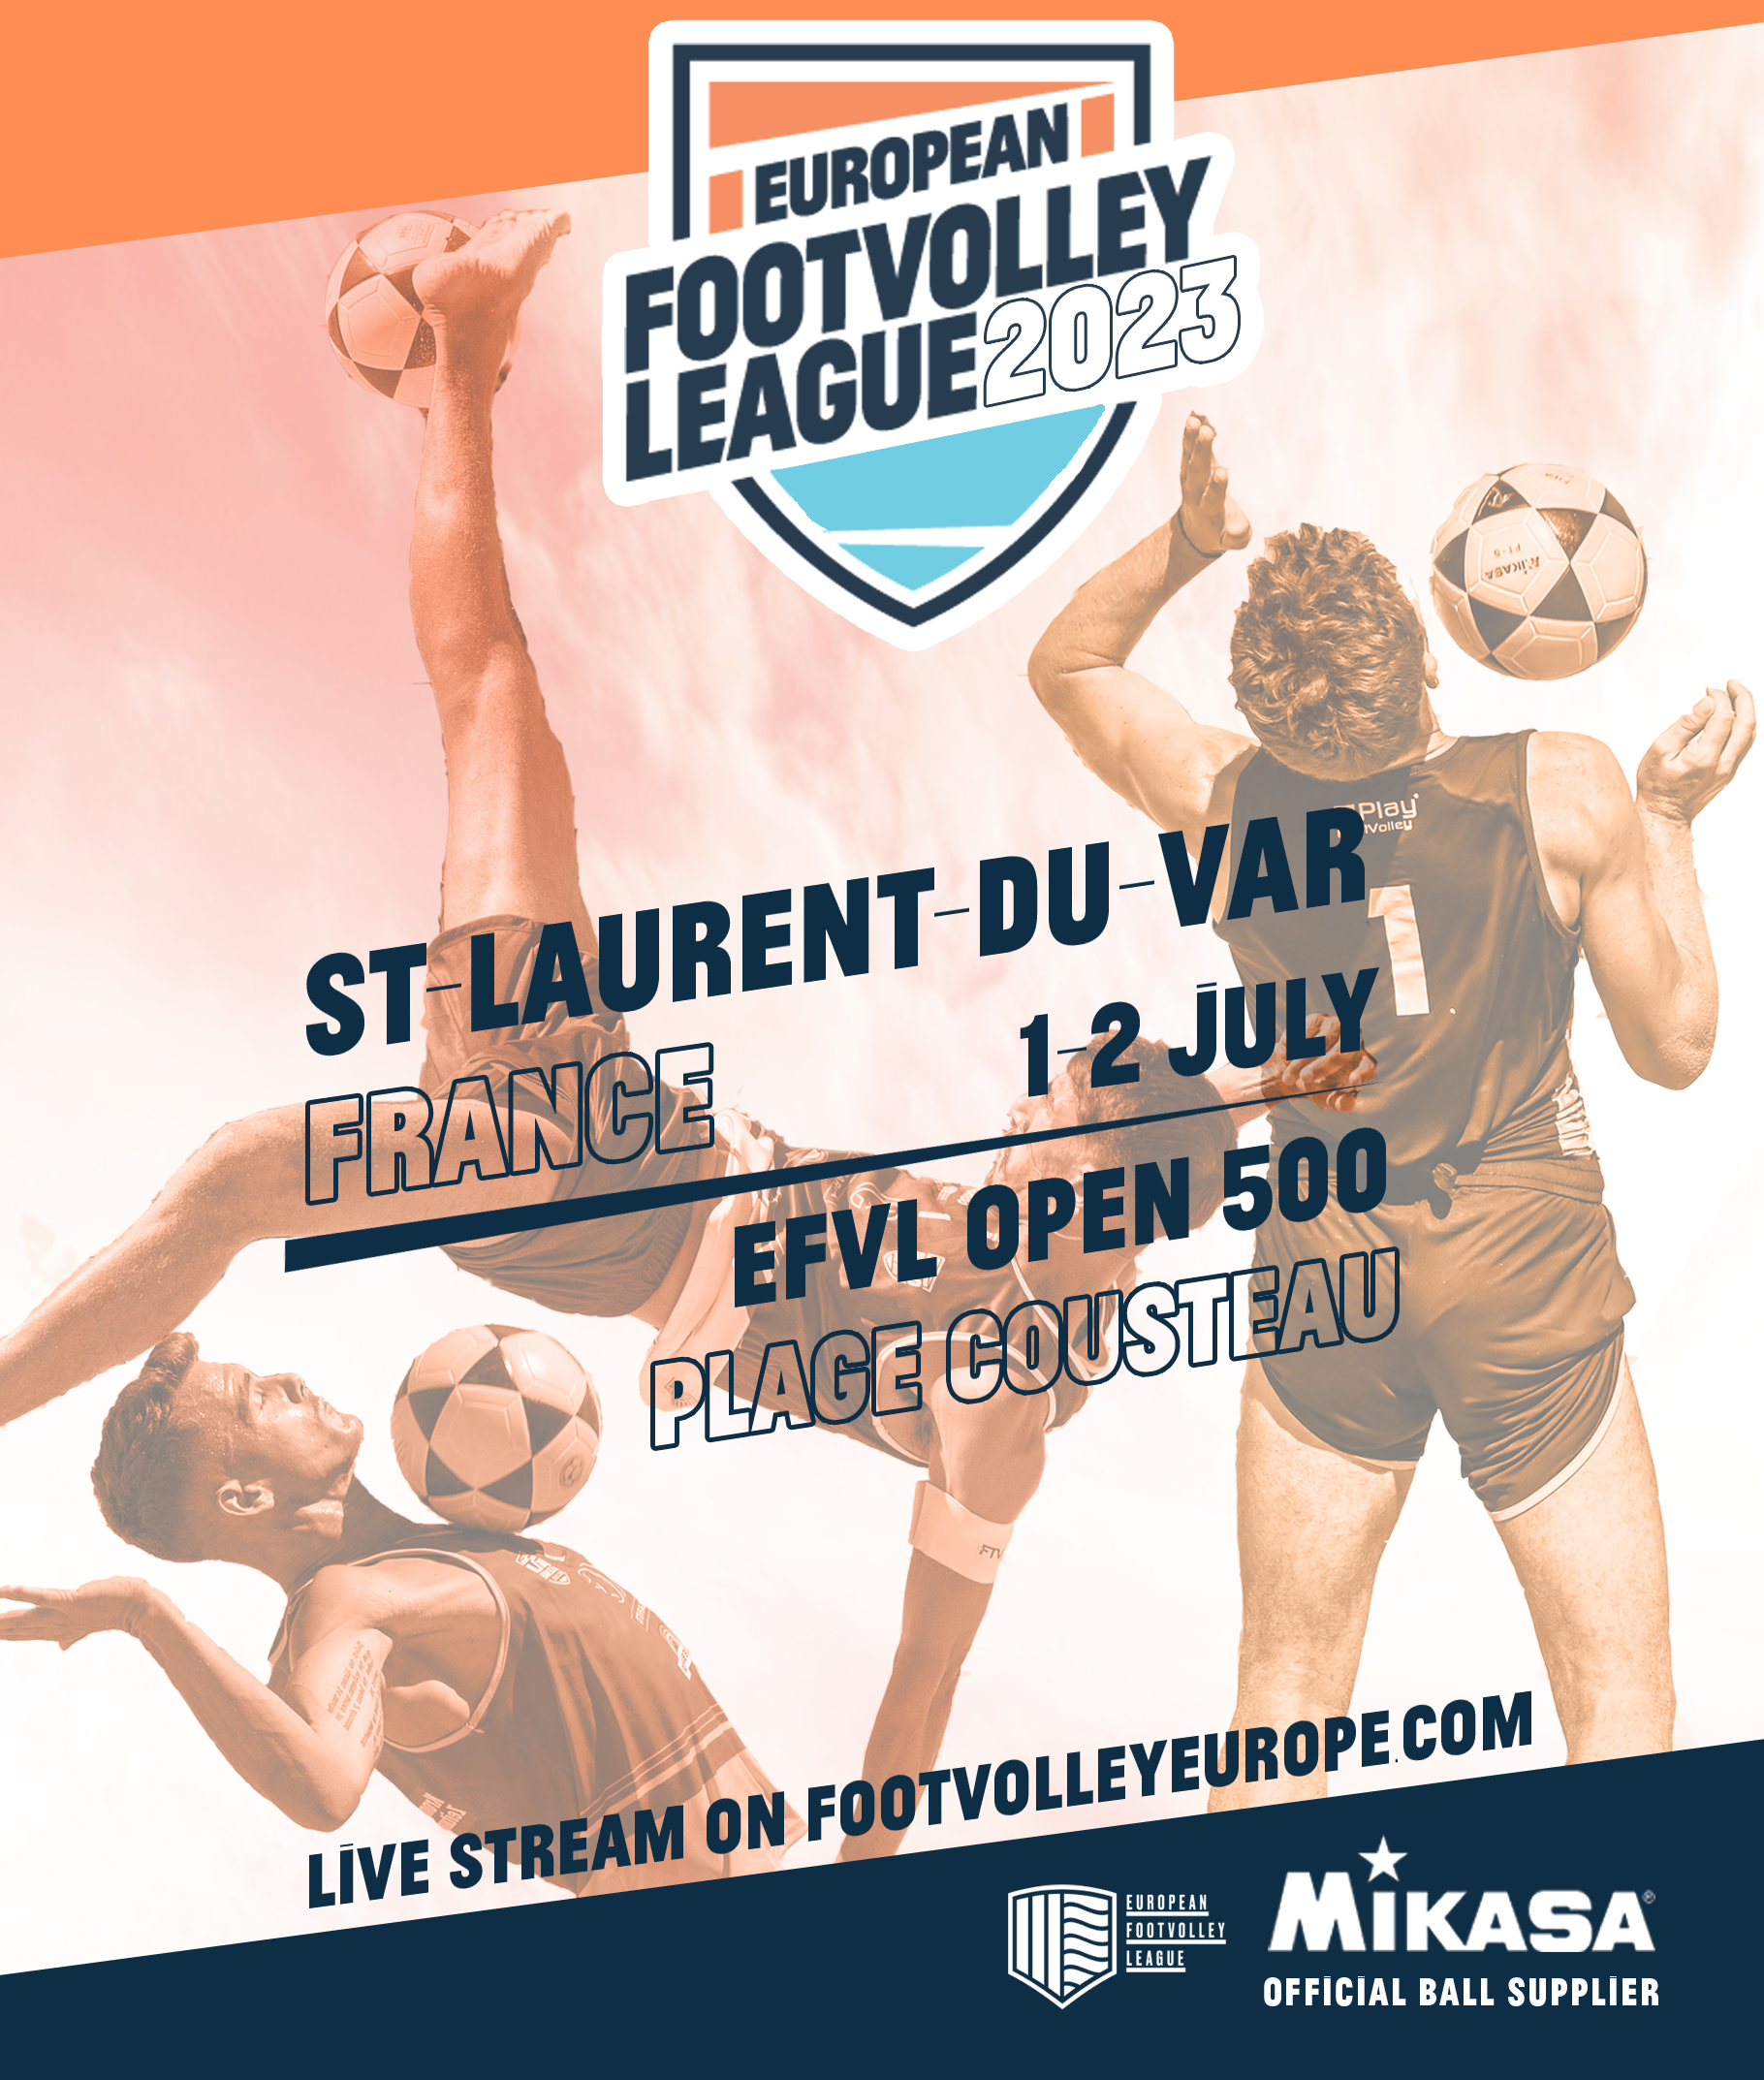 EFVL Open St-Laurent-du-Var, France — European Footvolley League